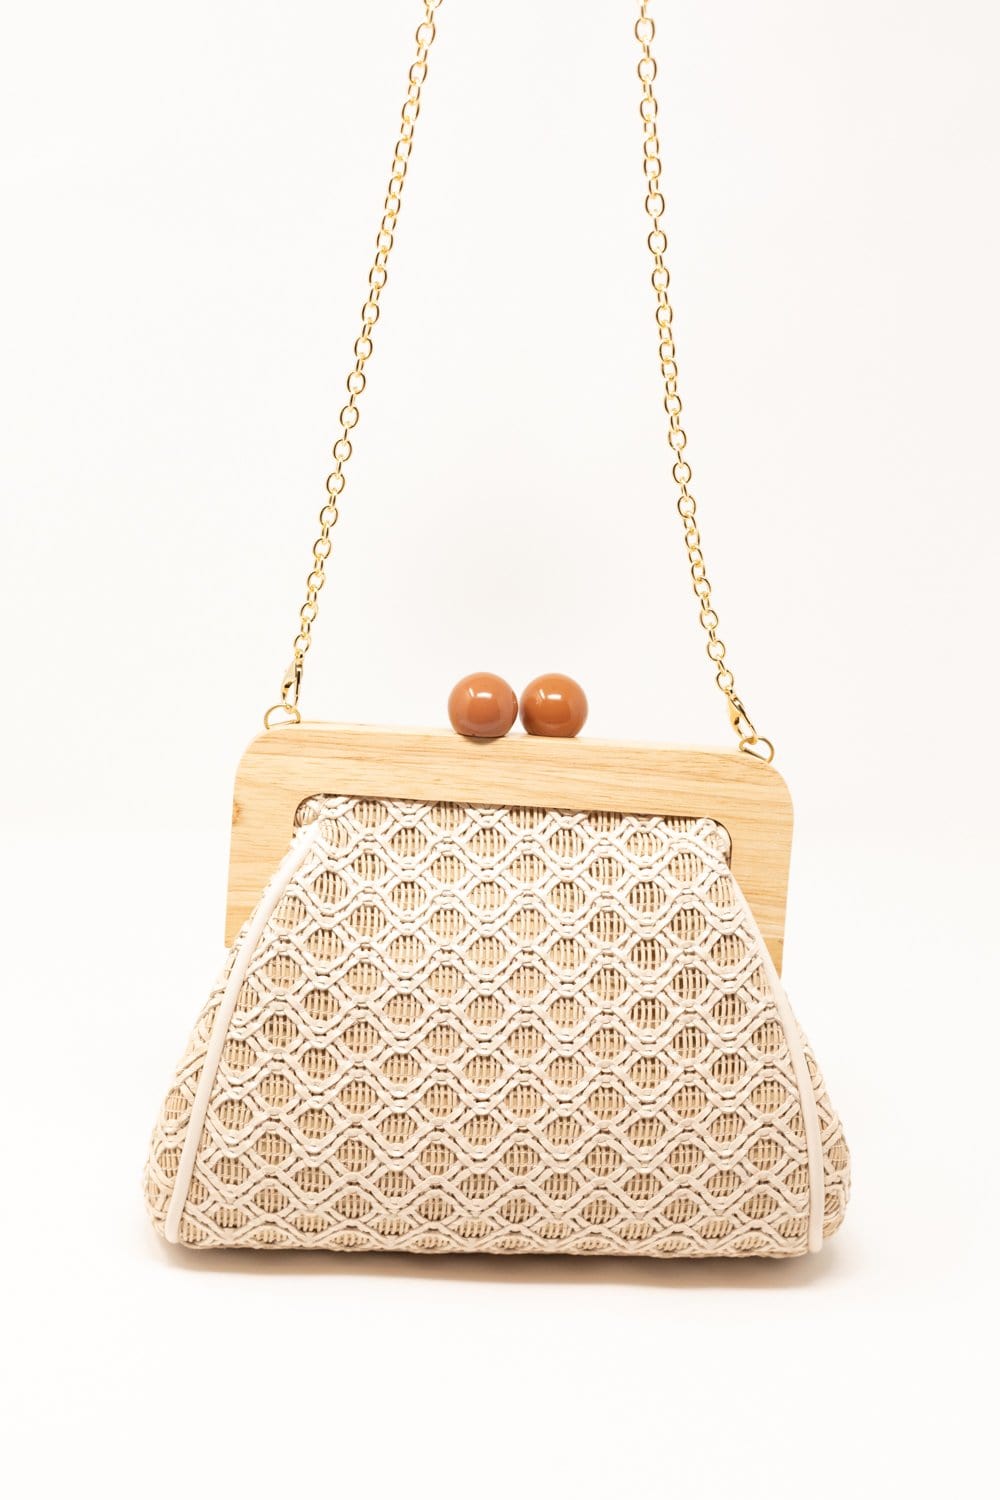 Brenna Wooden Wicker Bag